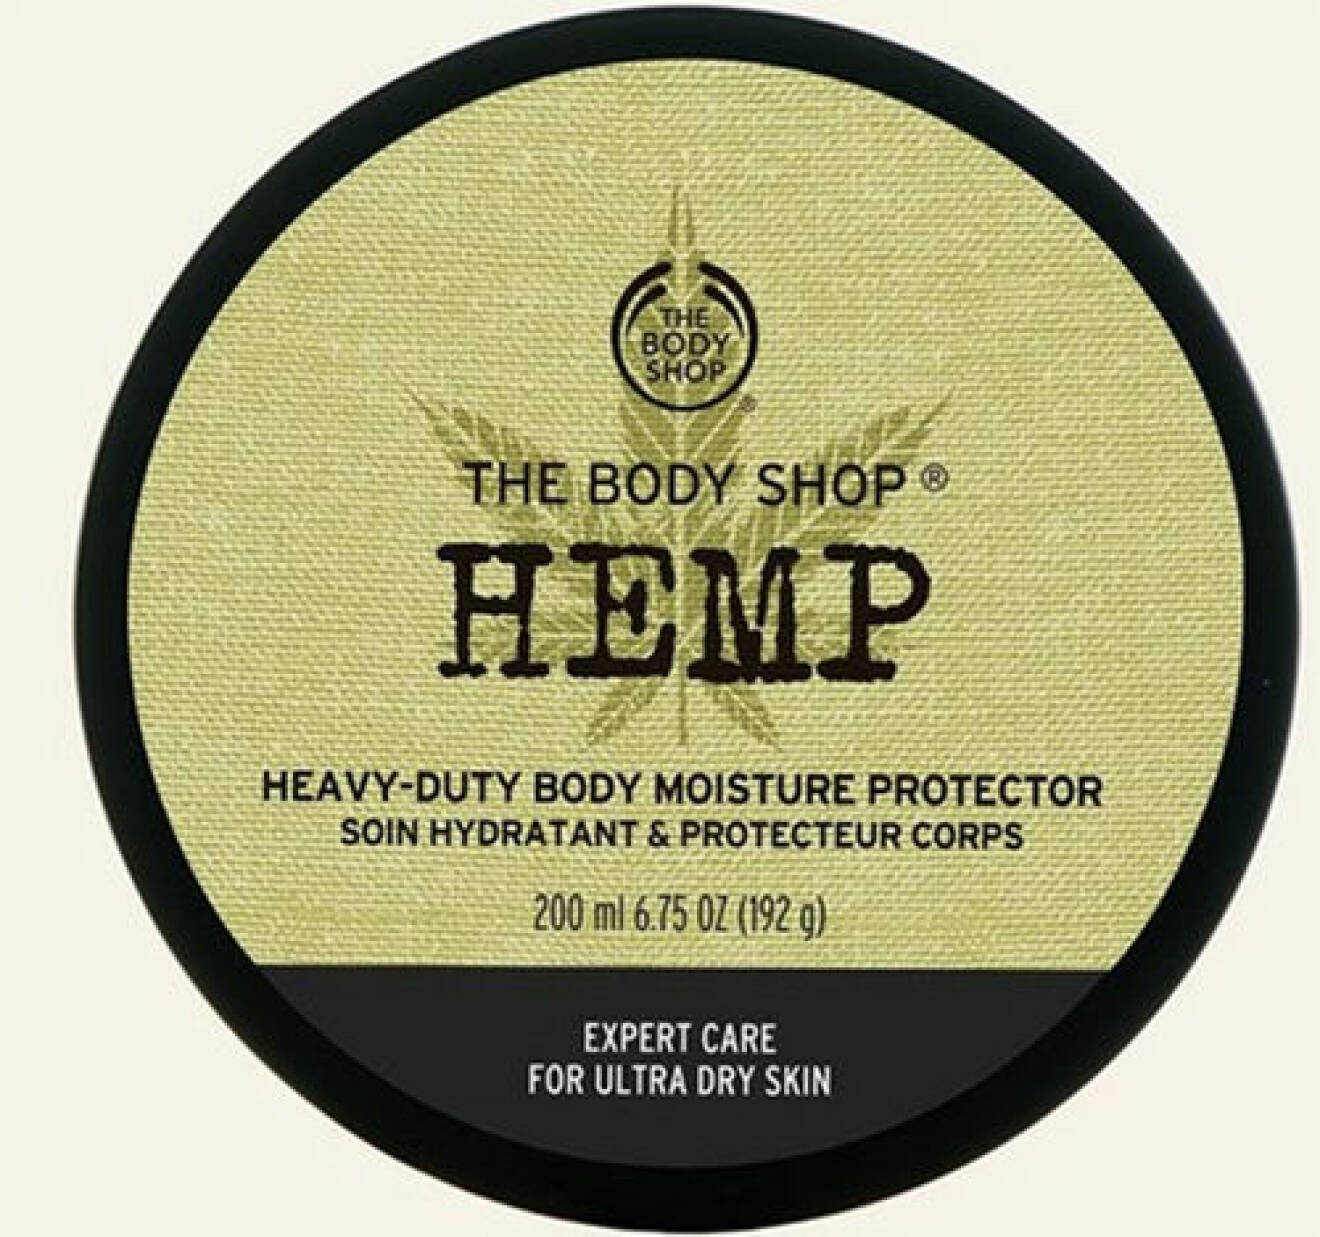 The body shop hemp body moisture protector